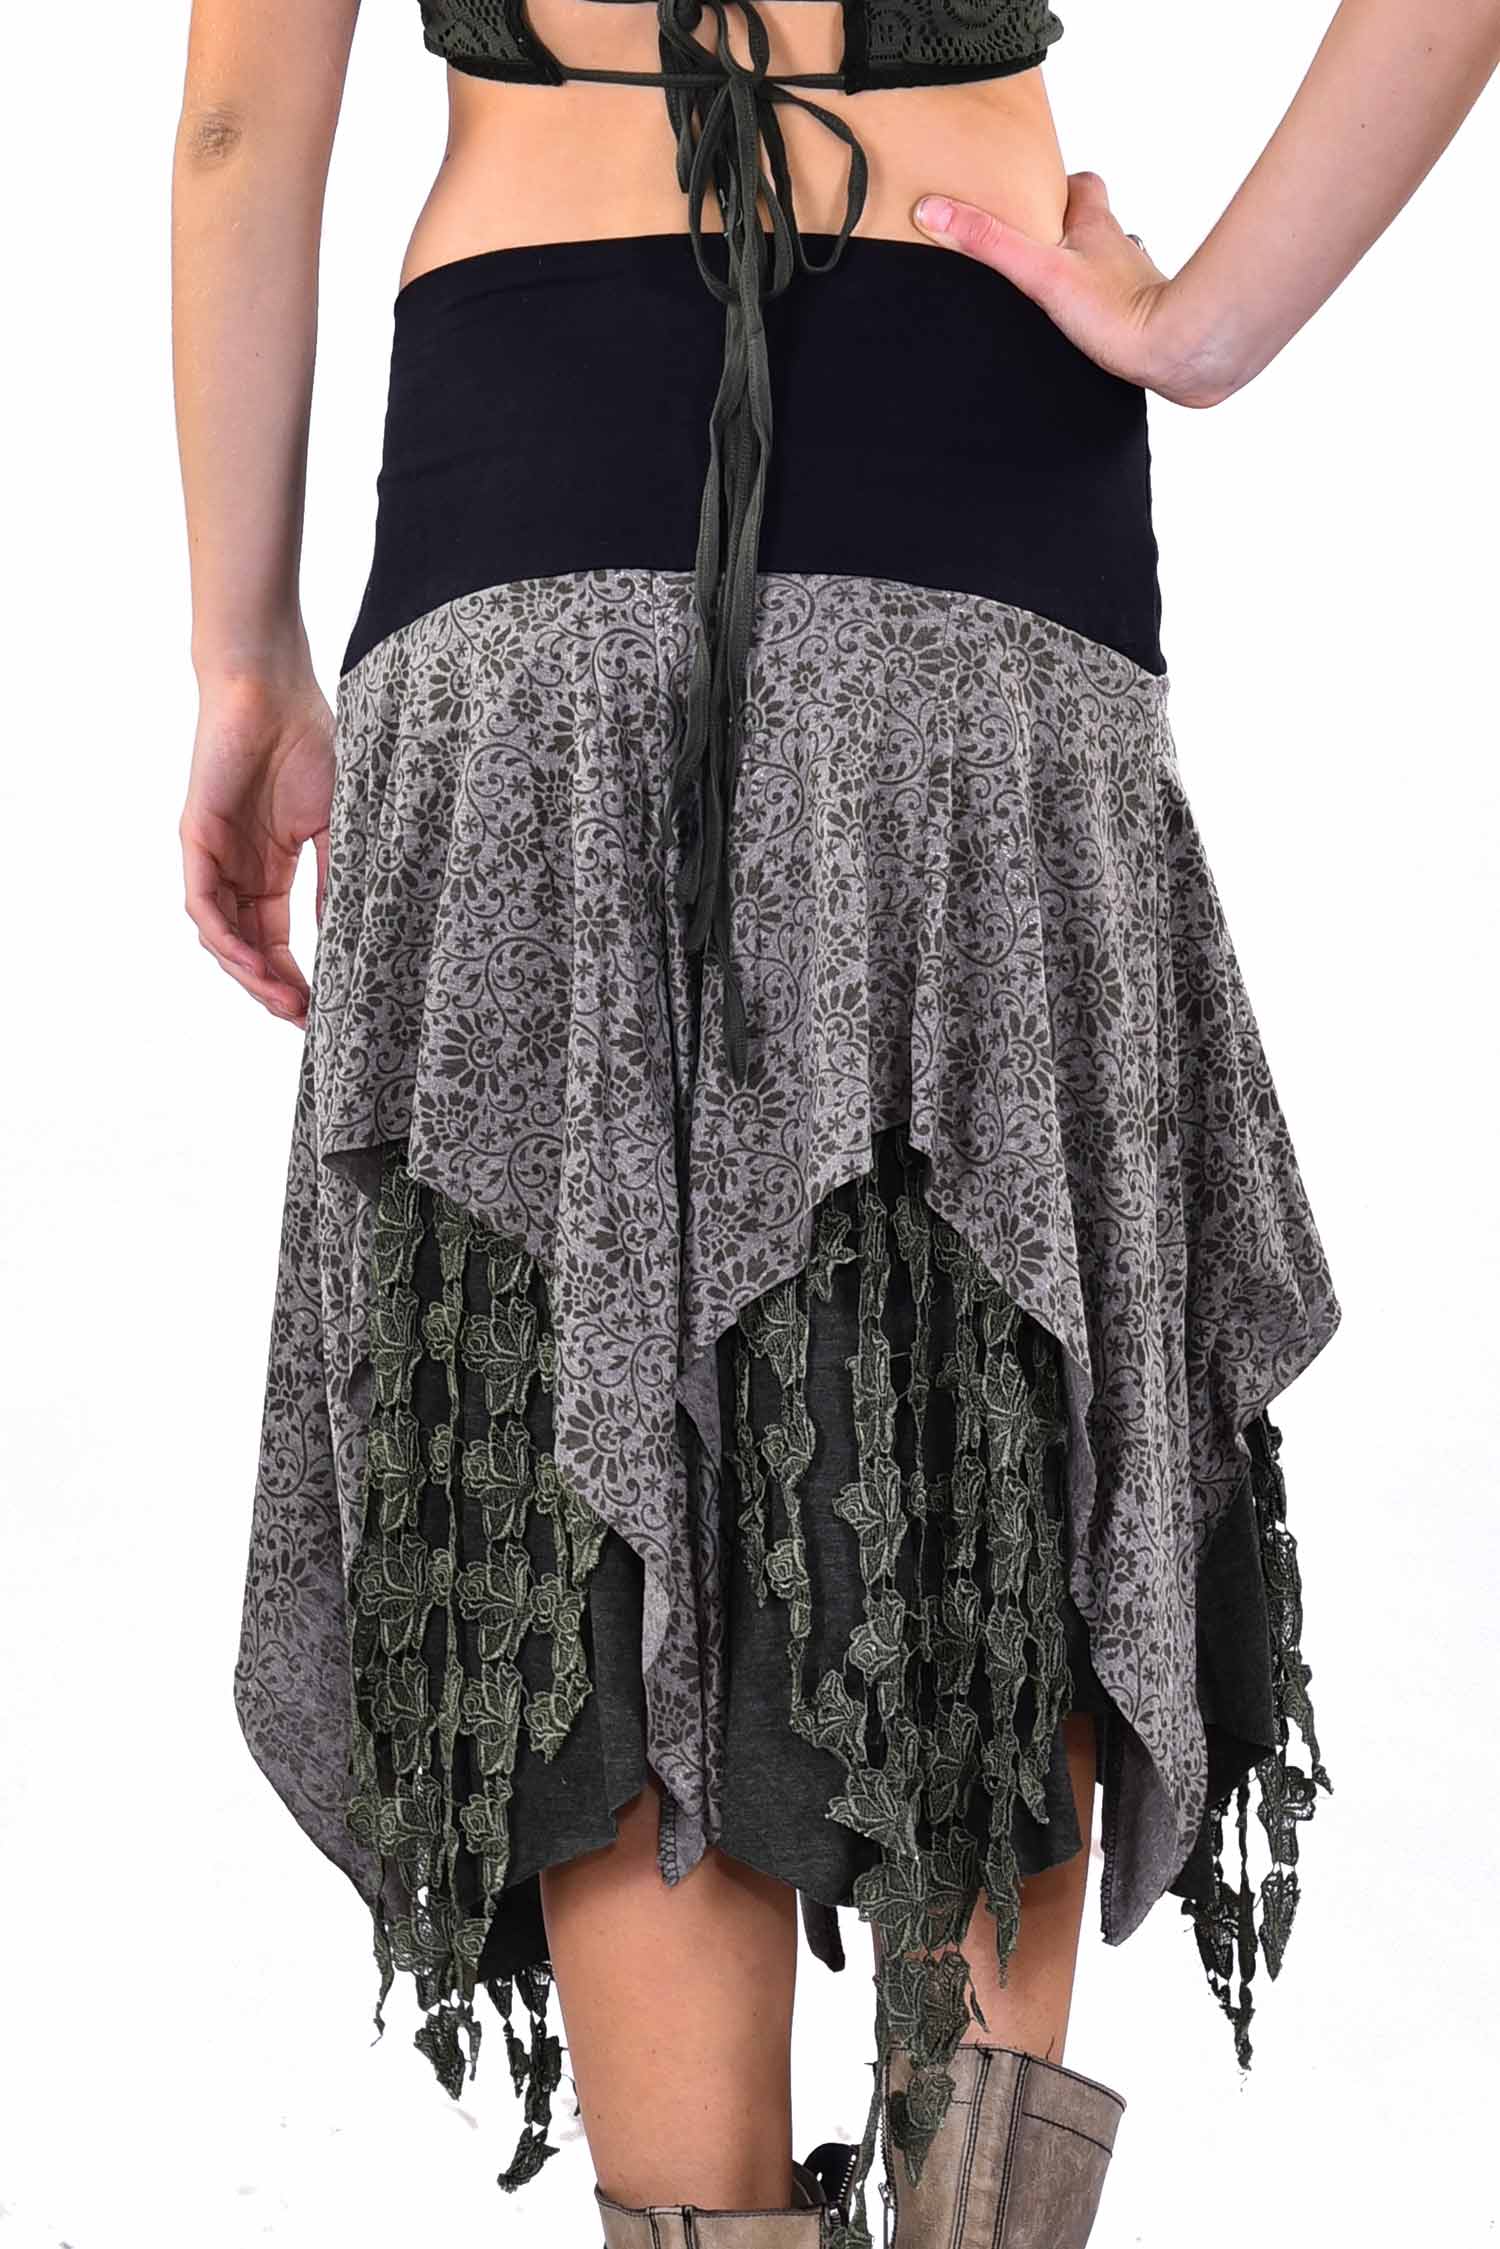 Pagan Wiccan Hippy Goddess Lace Layered Skirt | Altshop UK